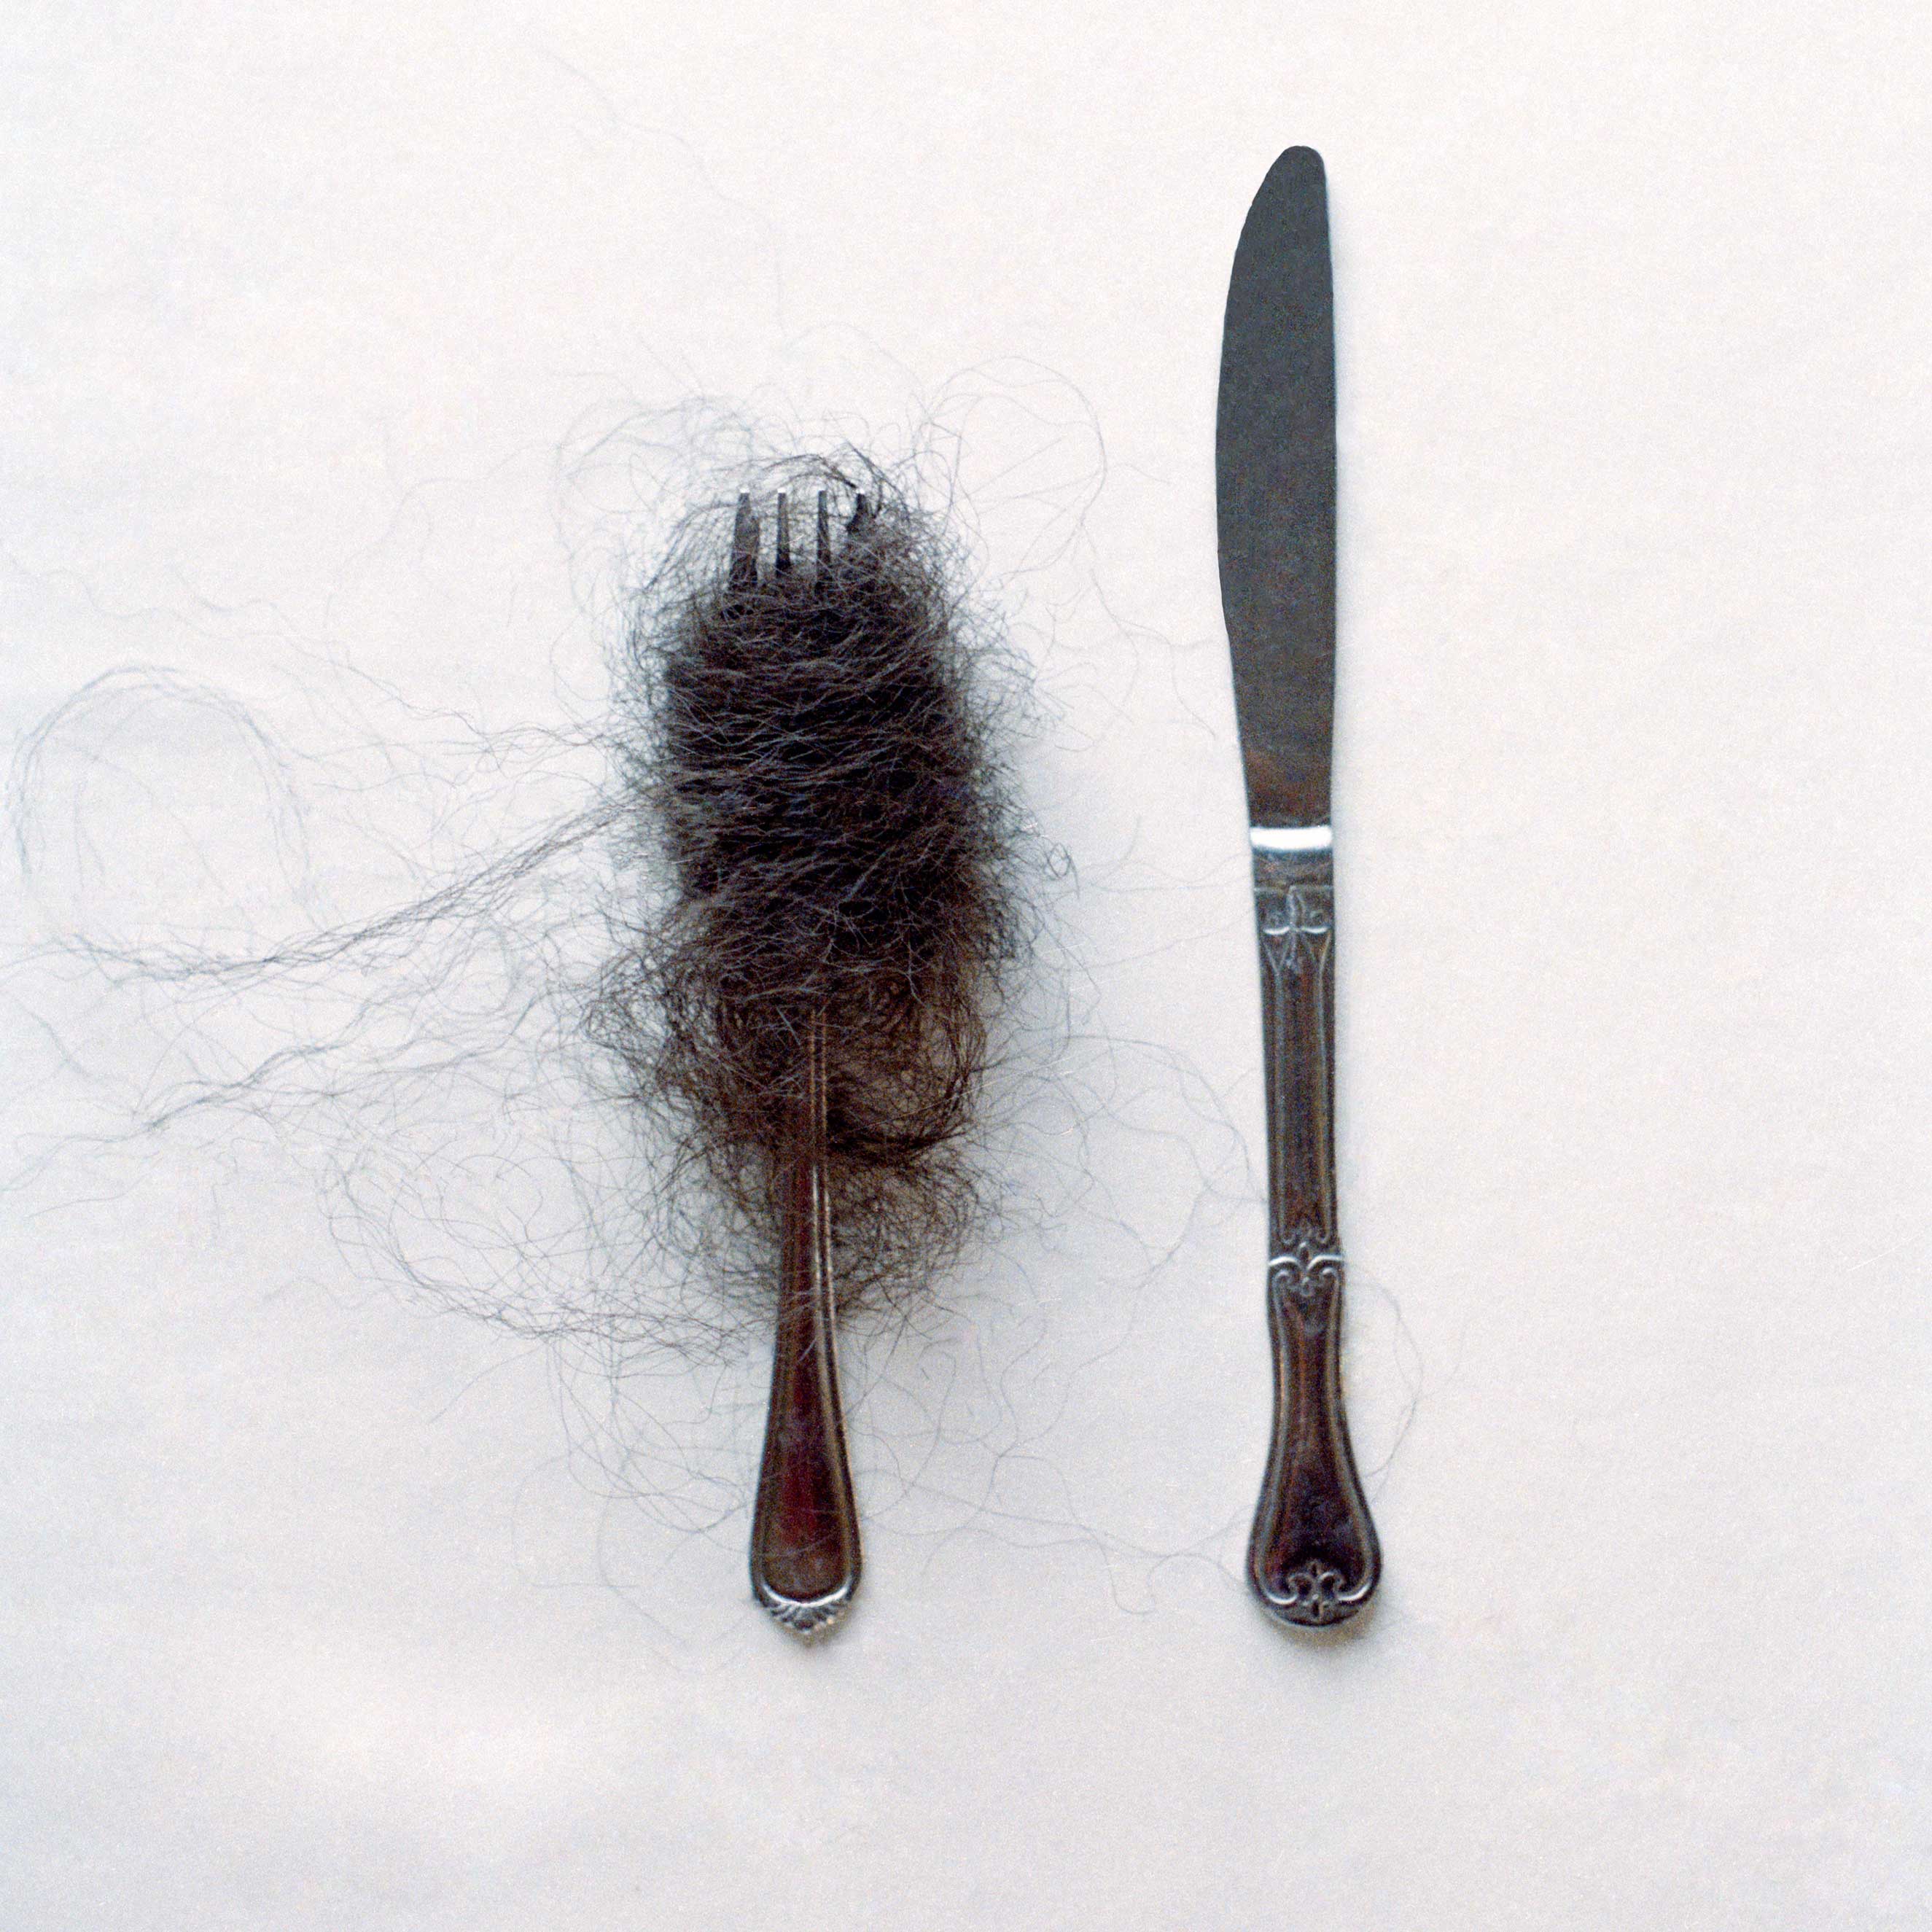 'Kanekalon on a Fork', The Refutation of “Good” Hair